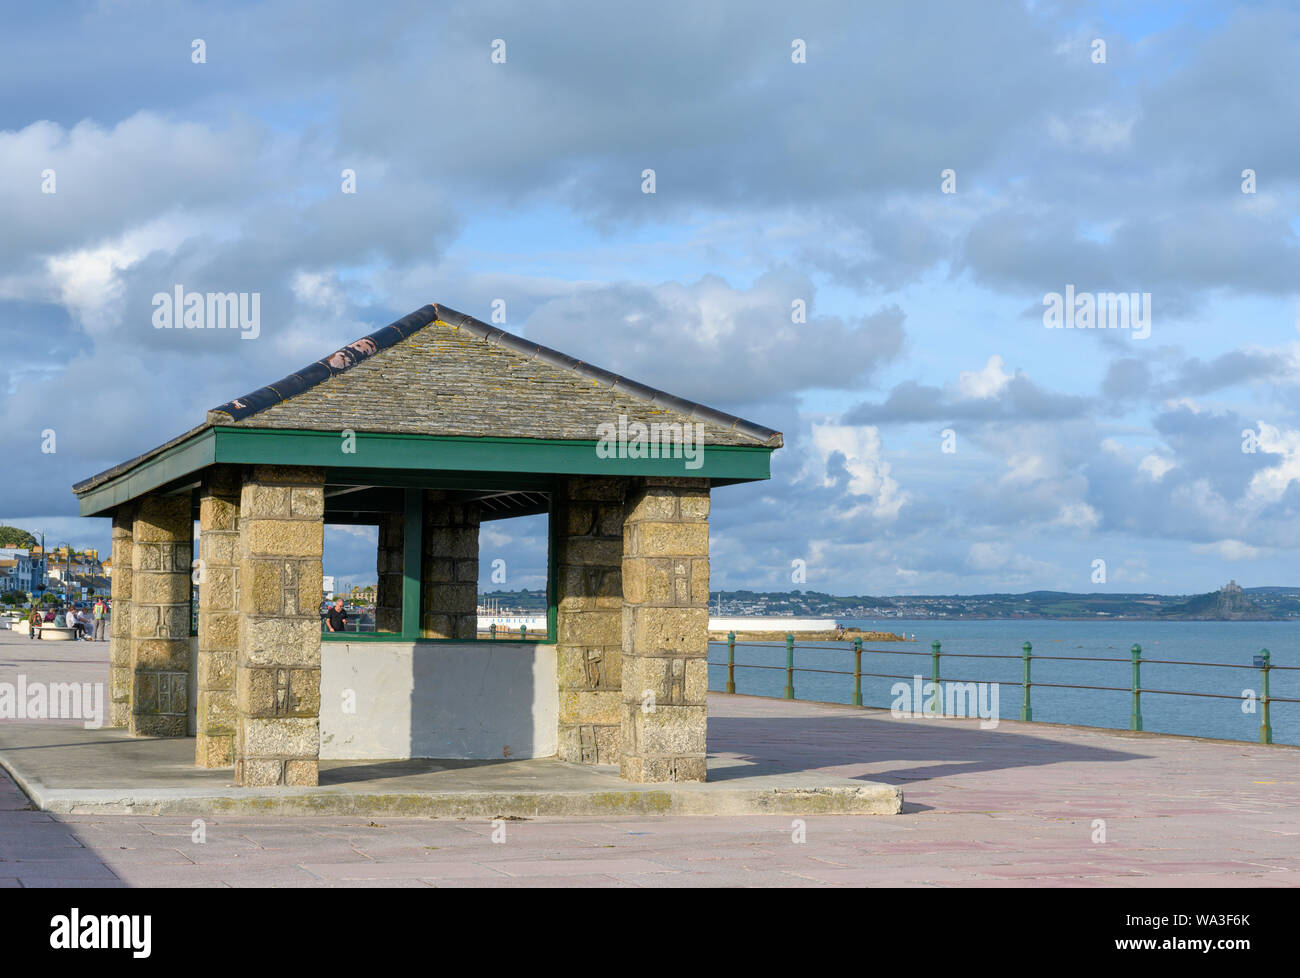 Promenade shelter on the Penzance sea front, Penzance, Cornwall, England, UK Stock Photo